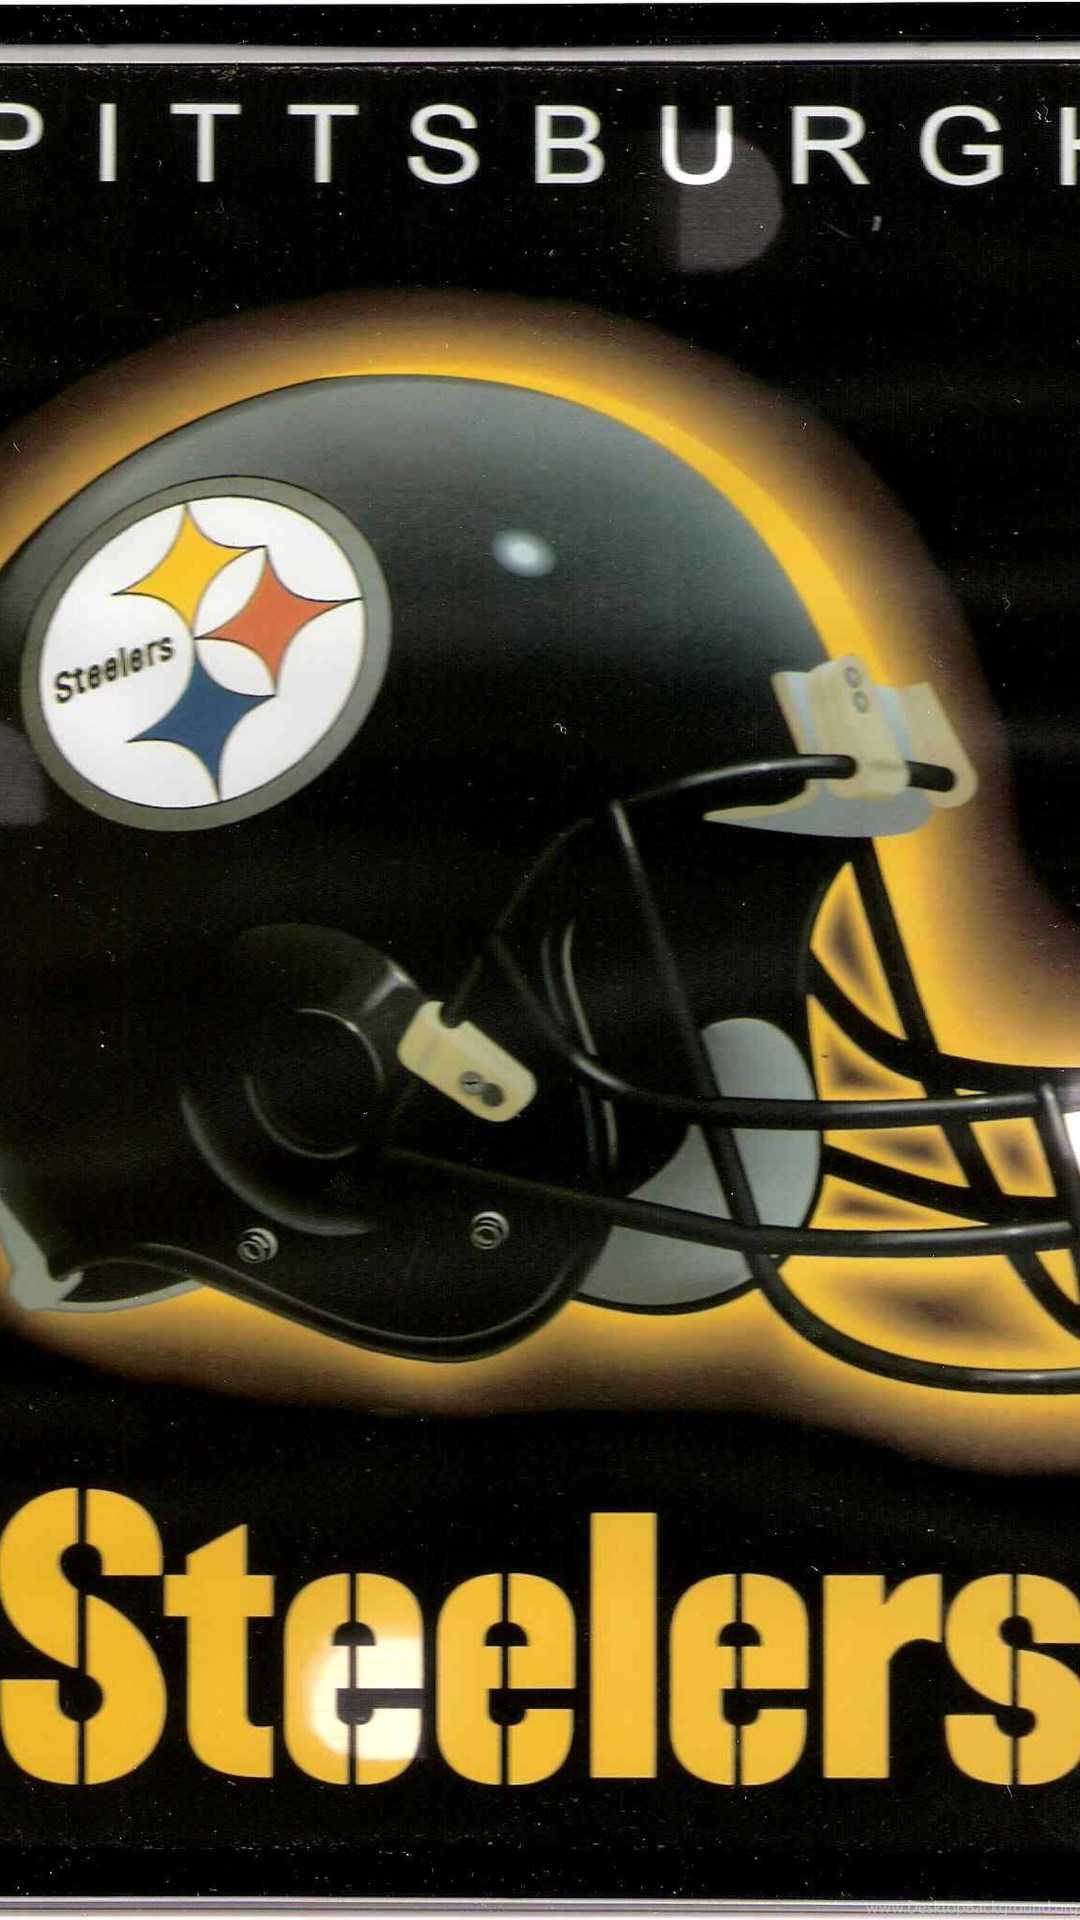 Steelers Wallpaper 1